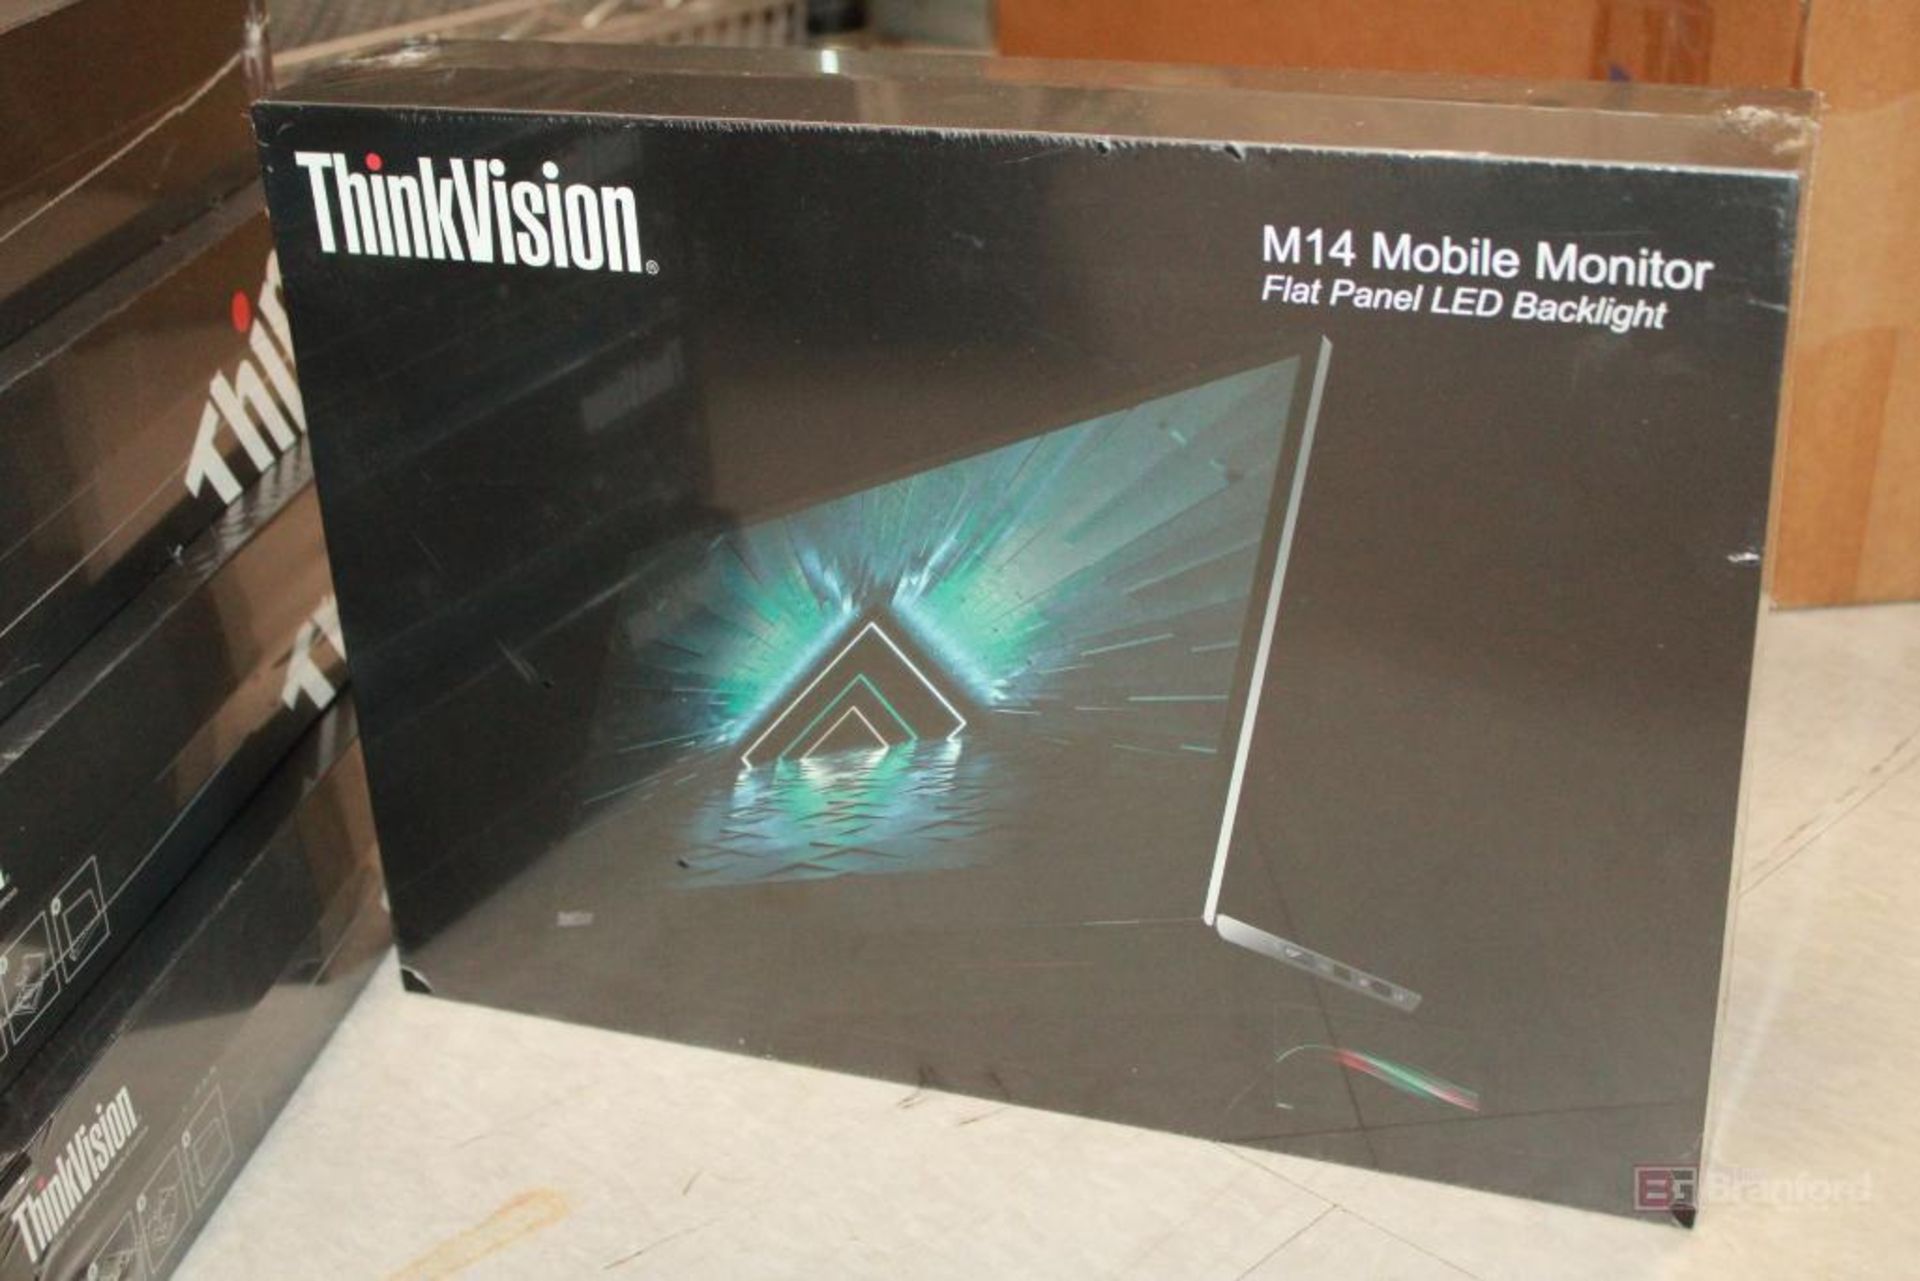 5) Lenovo Think Vision M14 Mobile Monitors - Image 2 of 2